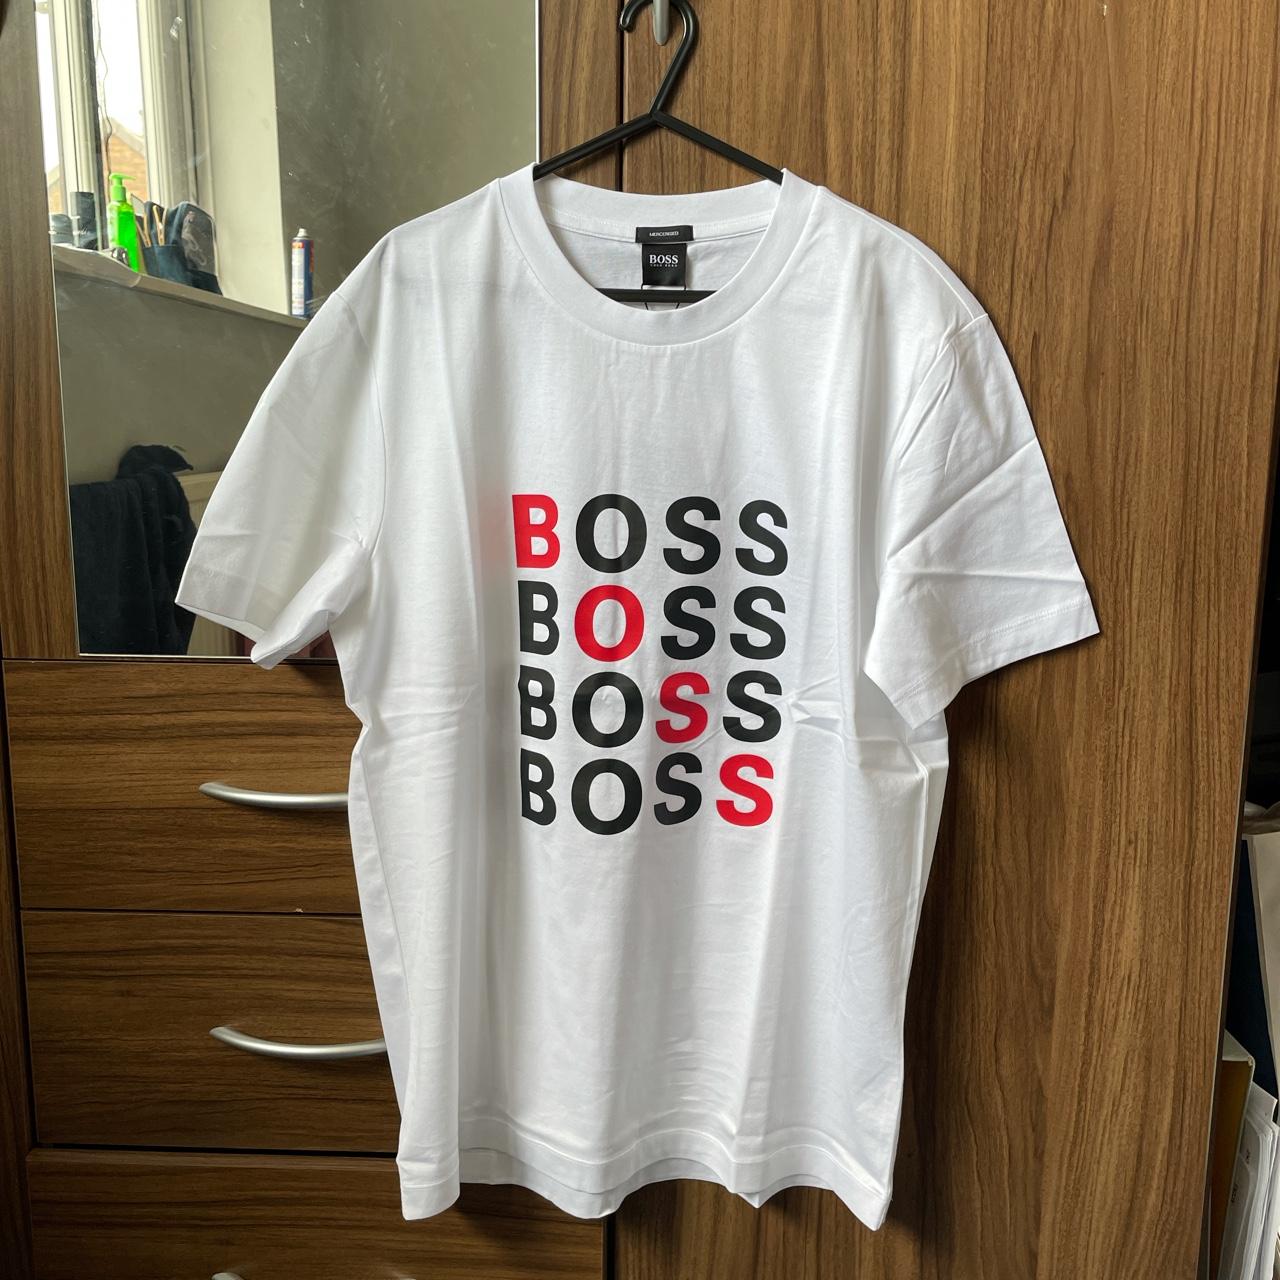 Hugo Boss crew neck tiburt 215 logo T-shirt in - Depop